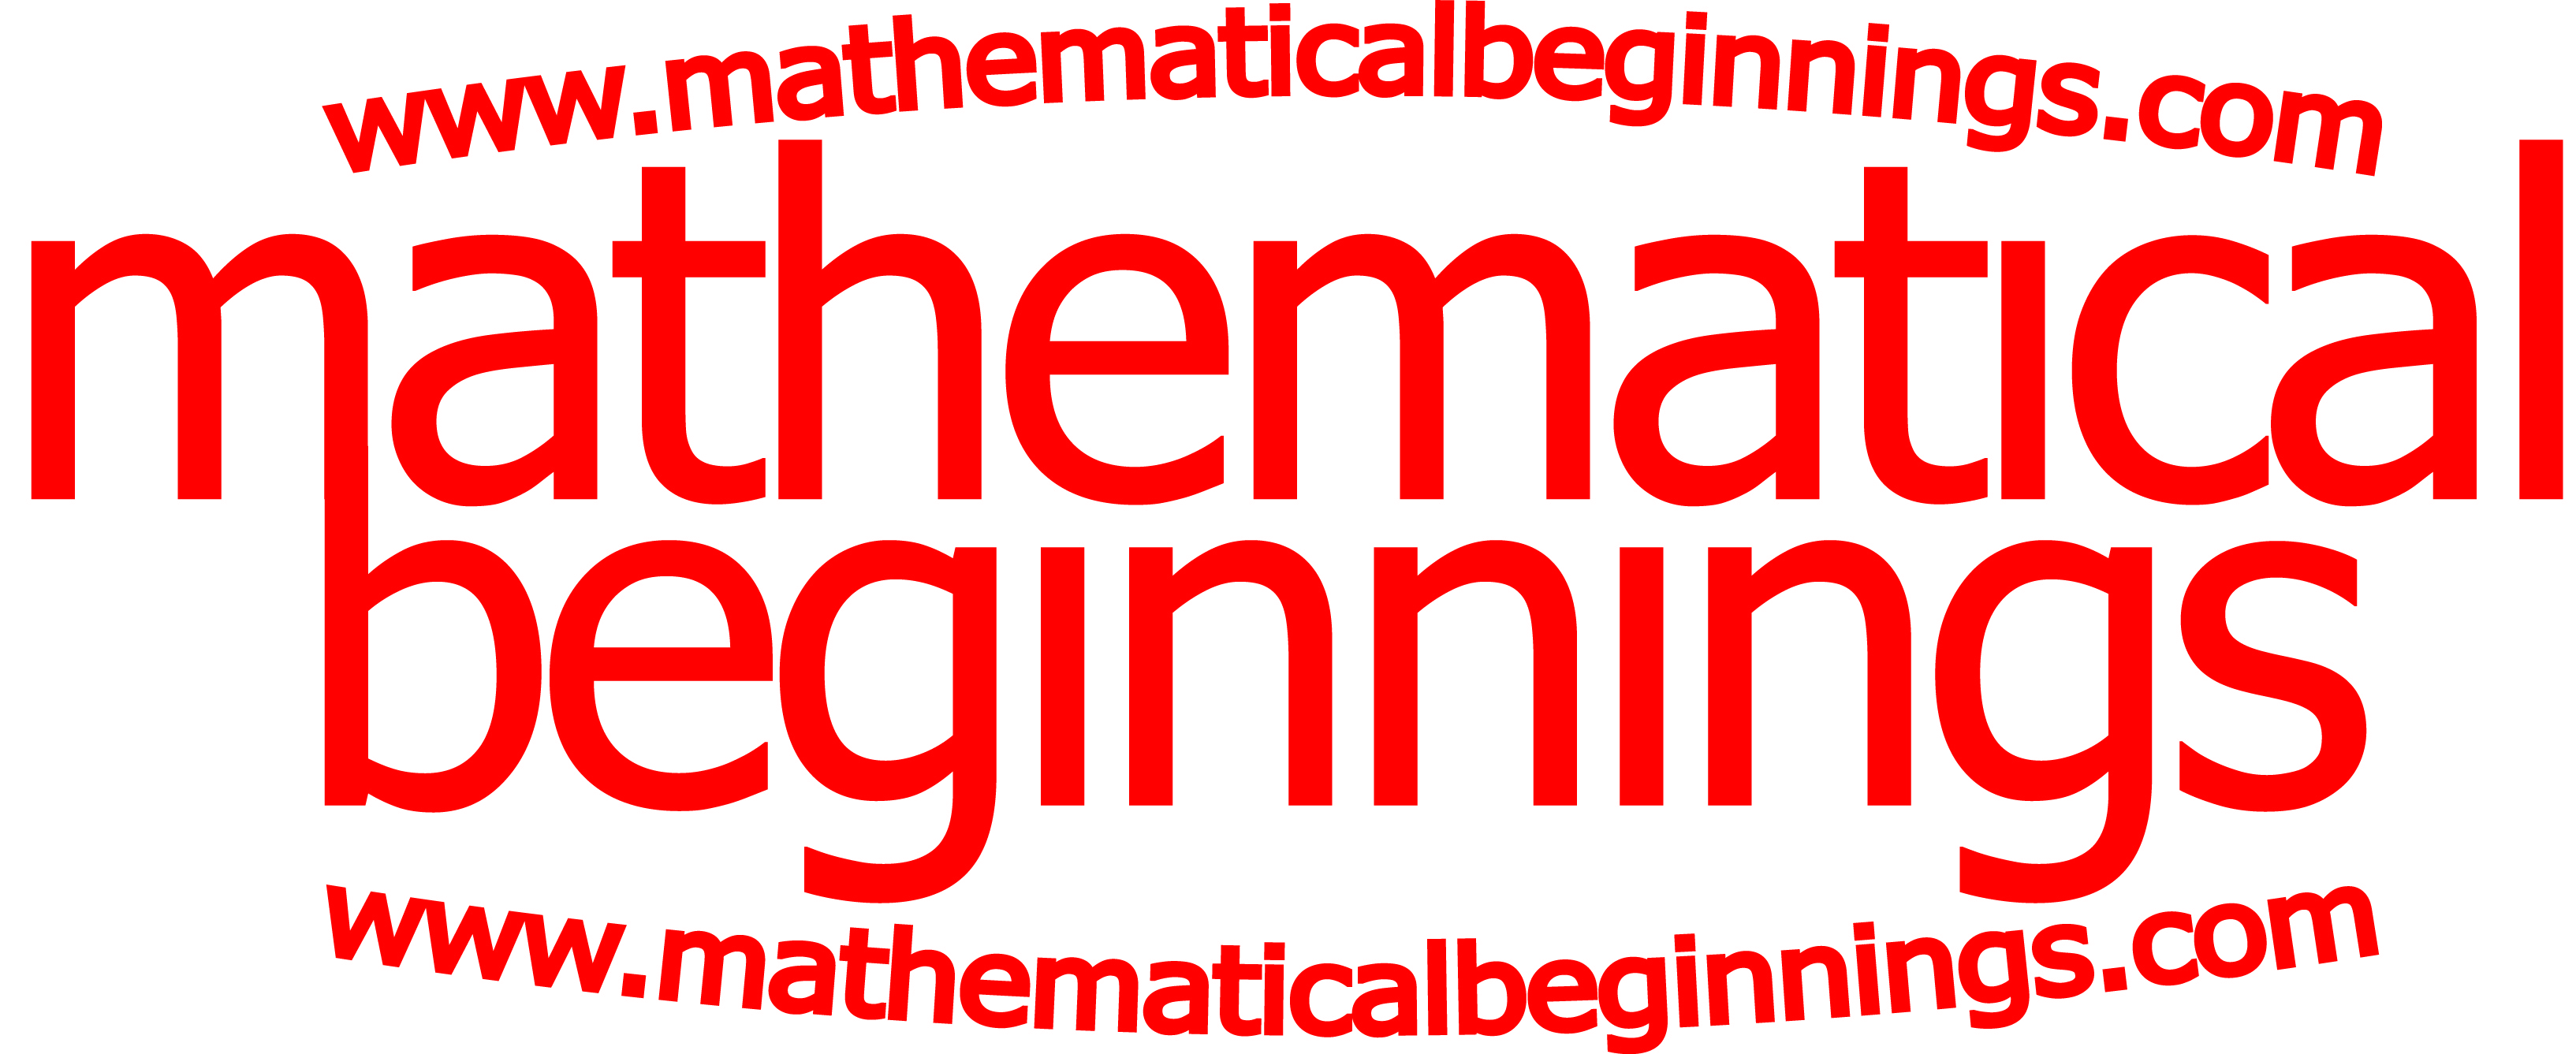 mathematical beginnings logo.png